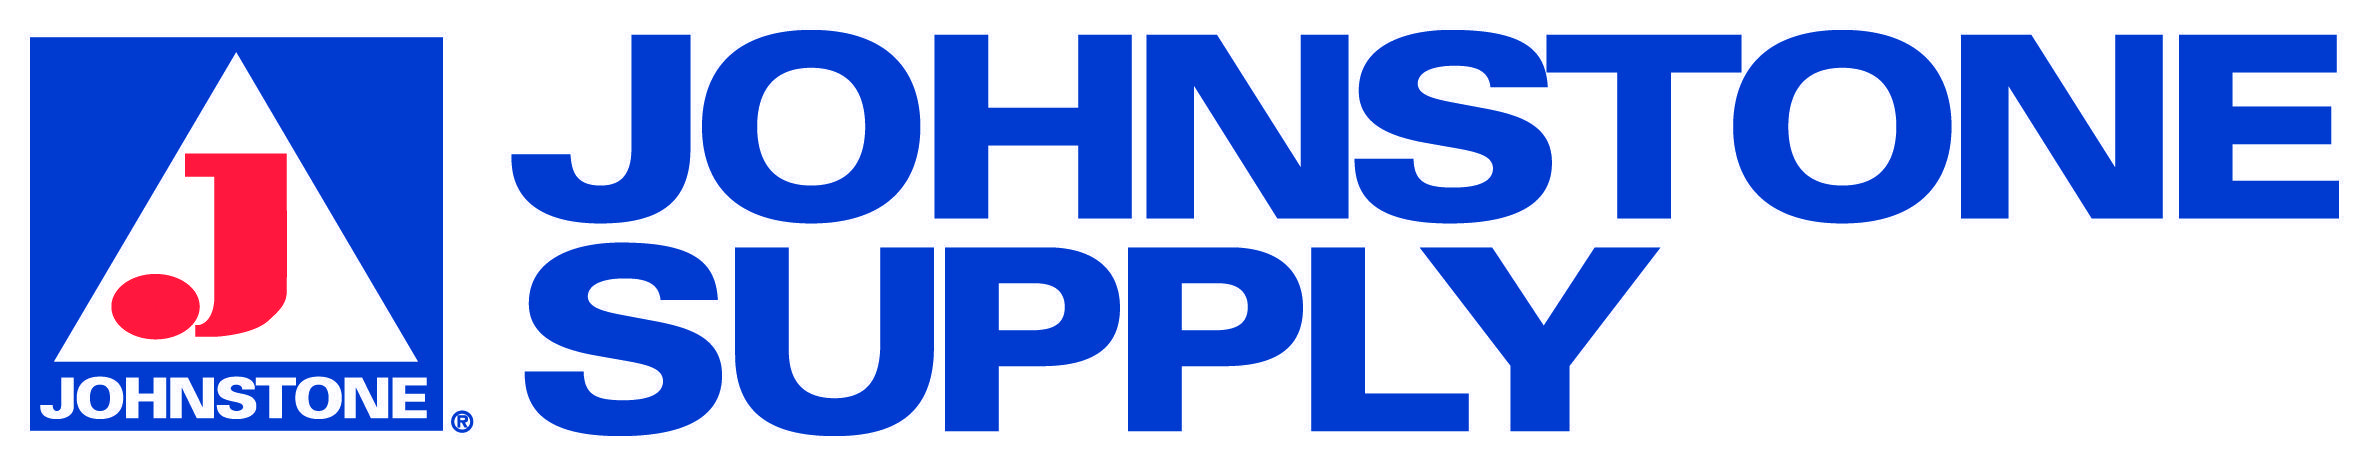 Johnson Supply Logo - Bowl for Kids' Sake 2016